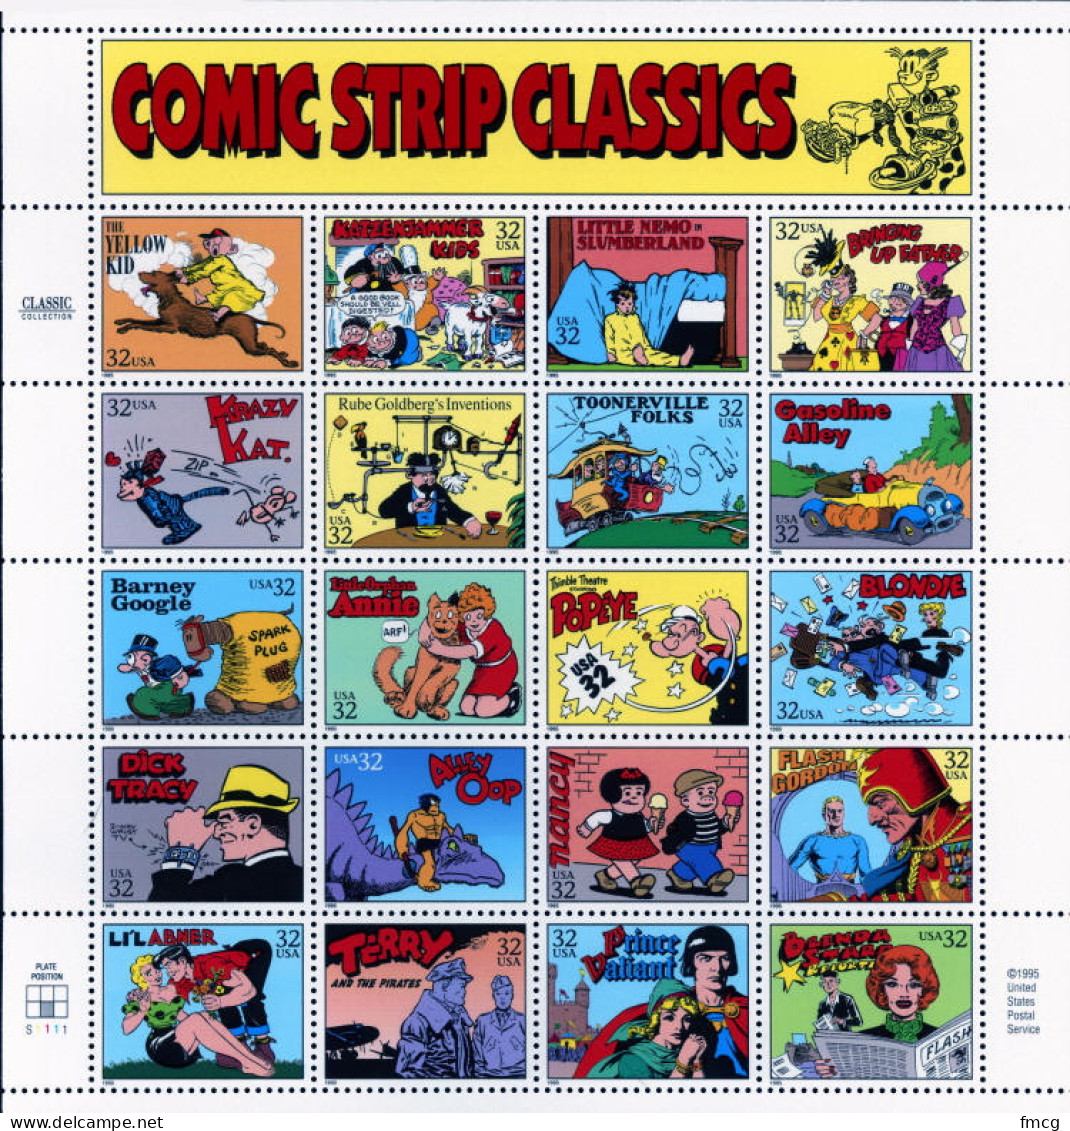 1995 Comic Strip Classics - Sheet Of 20, Mint Never Hinged - Nuevos